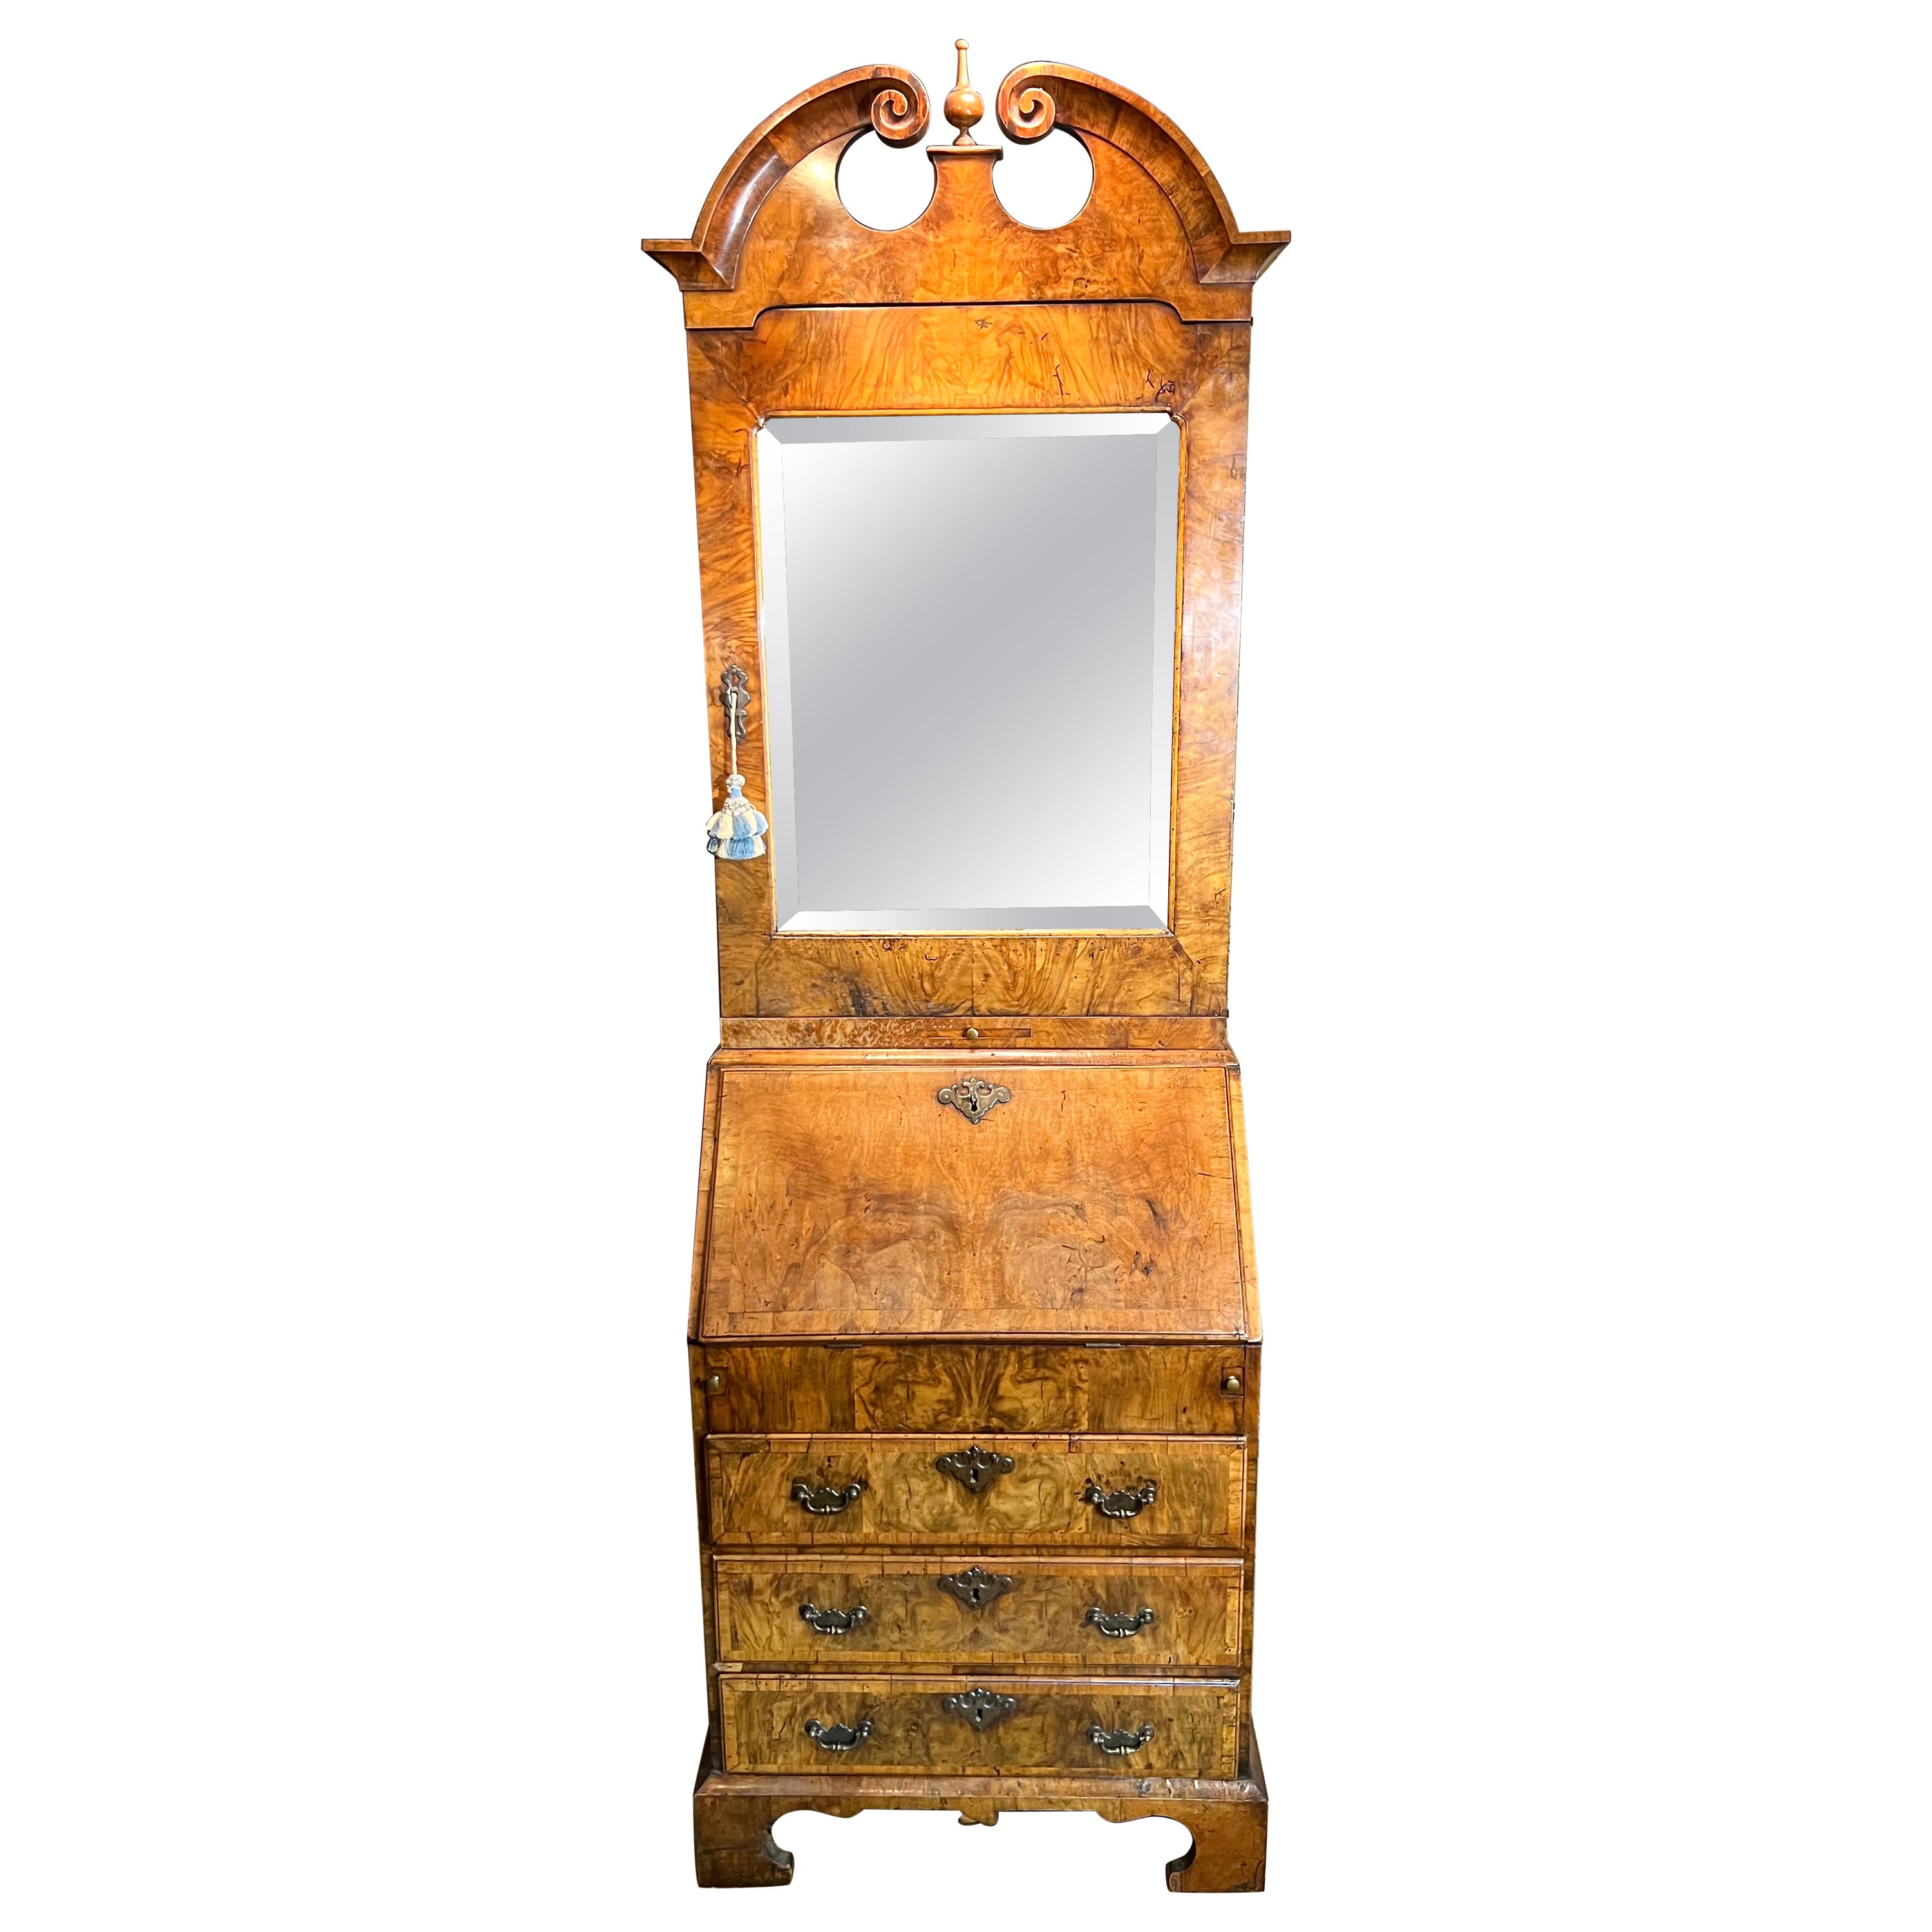 A rare small early-18th century walnut bureau bookcase/ cabinet